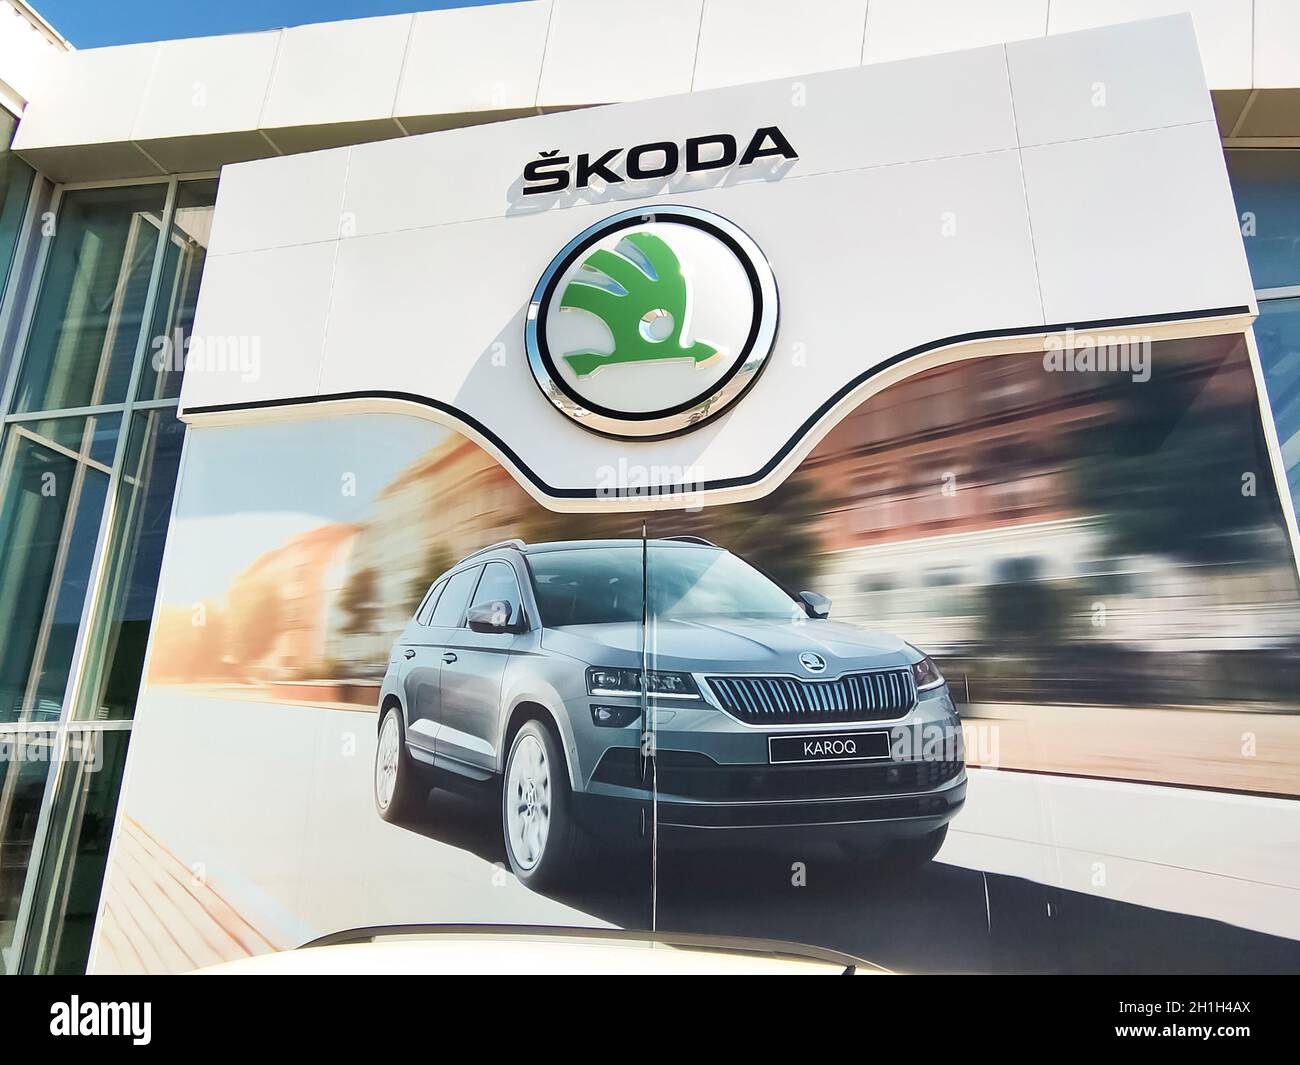 Kyiv, Ukraine - August 15, 2020: SKODA store at Kyiv, Ukraine on August 15, 2020. Skoda is an automobile manufacturer based in the Czech Republic. Stock Photo